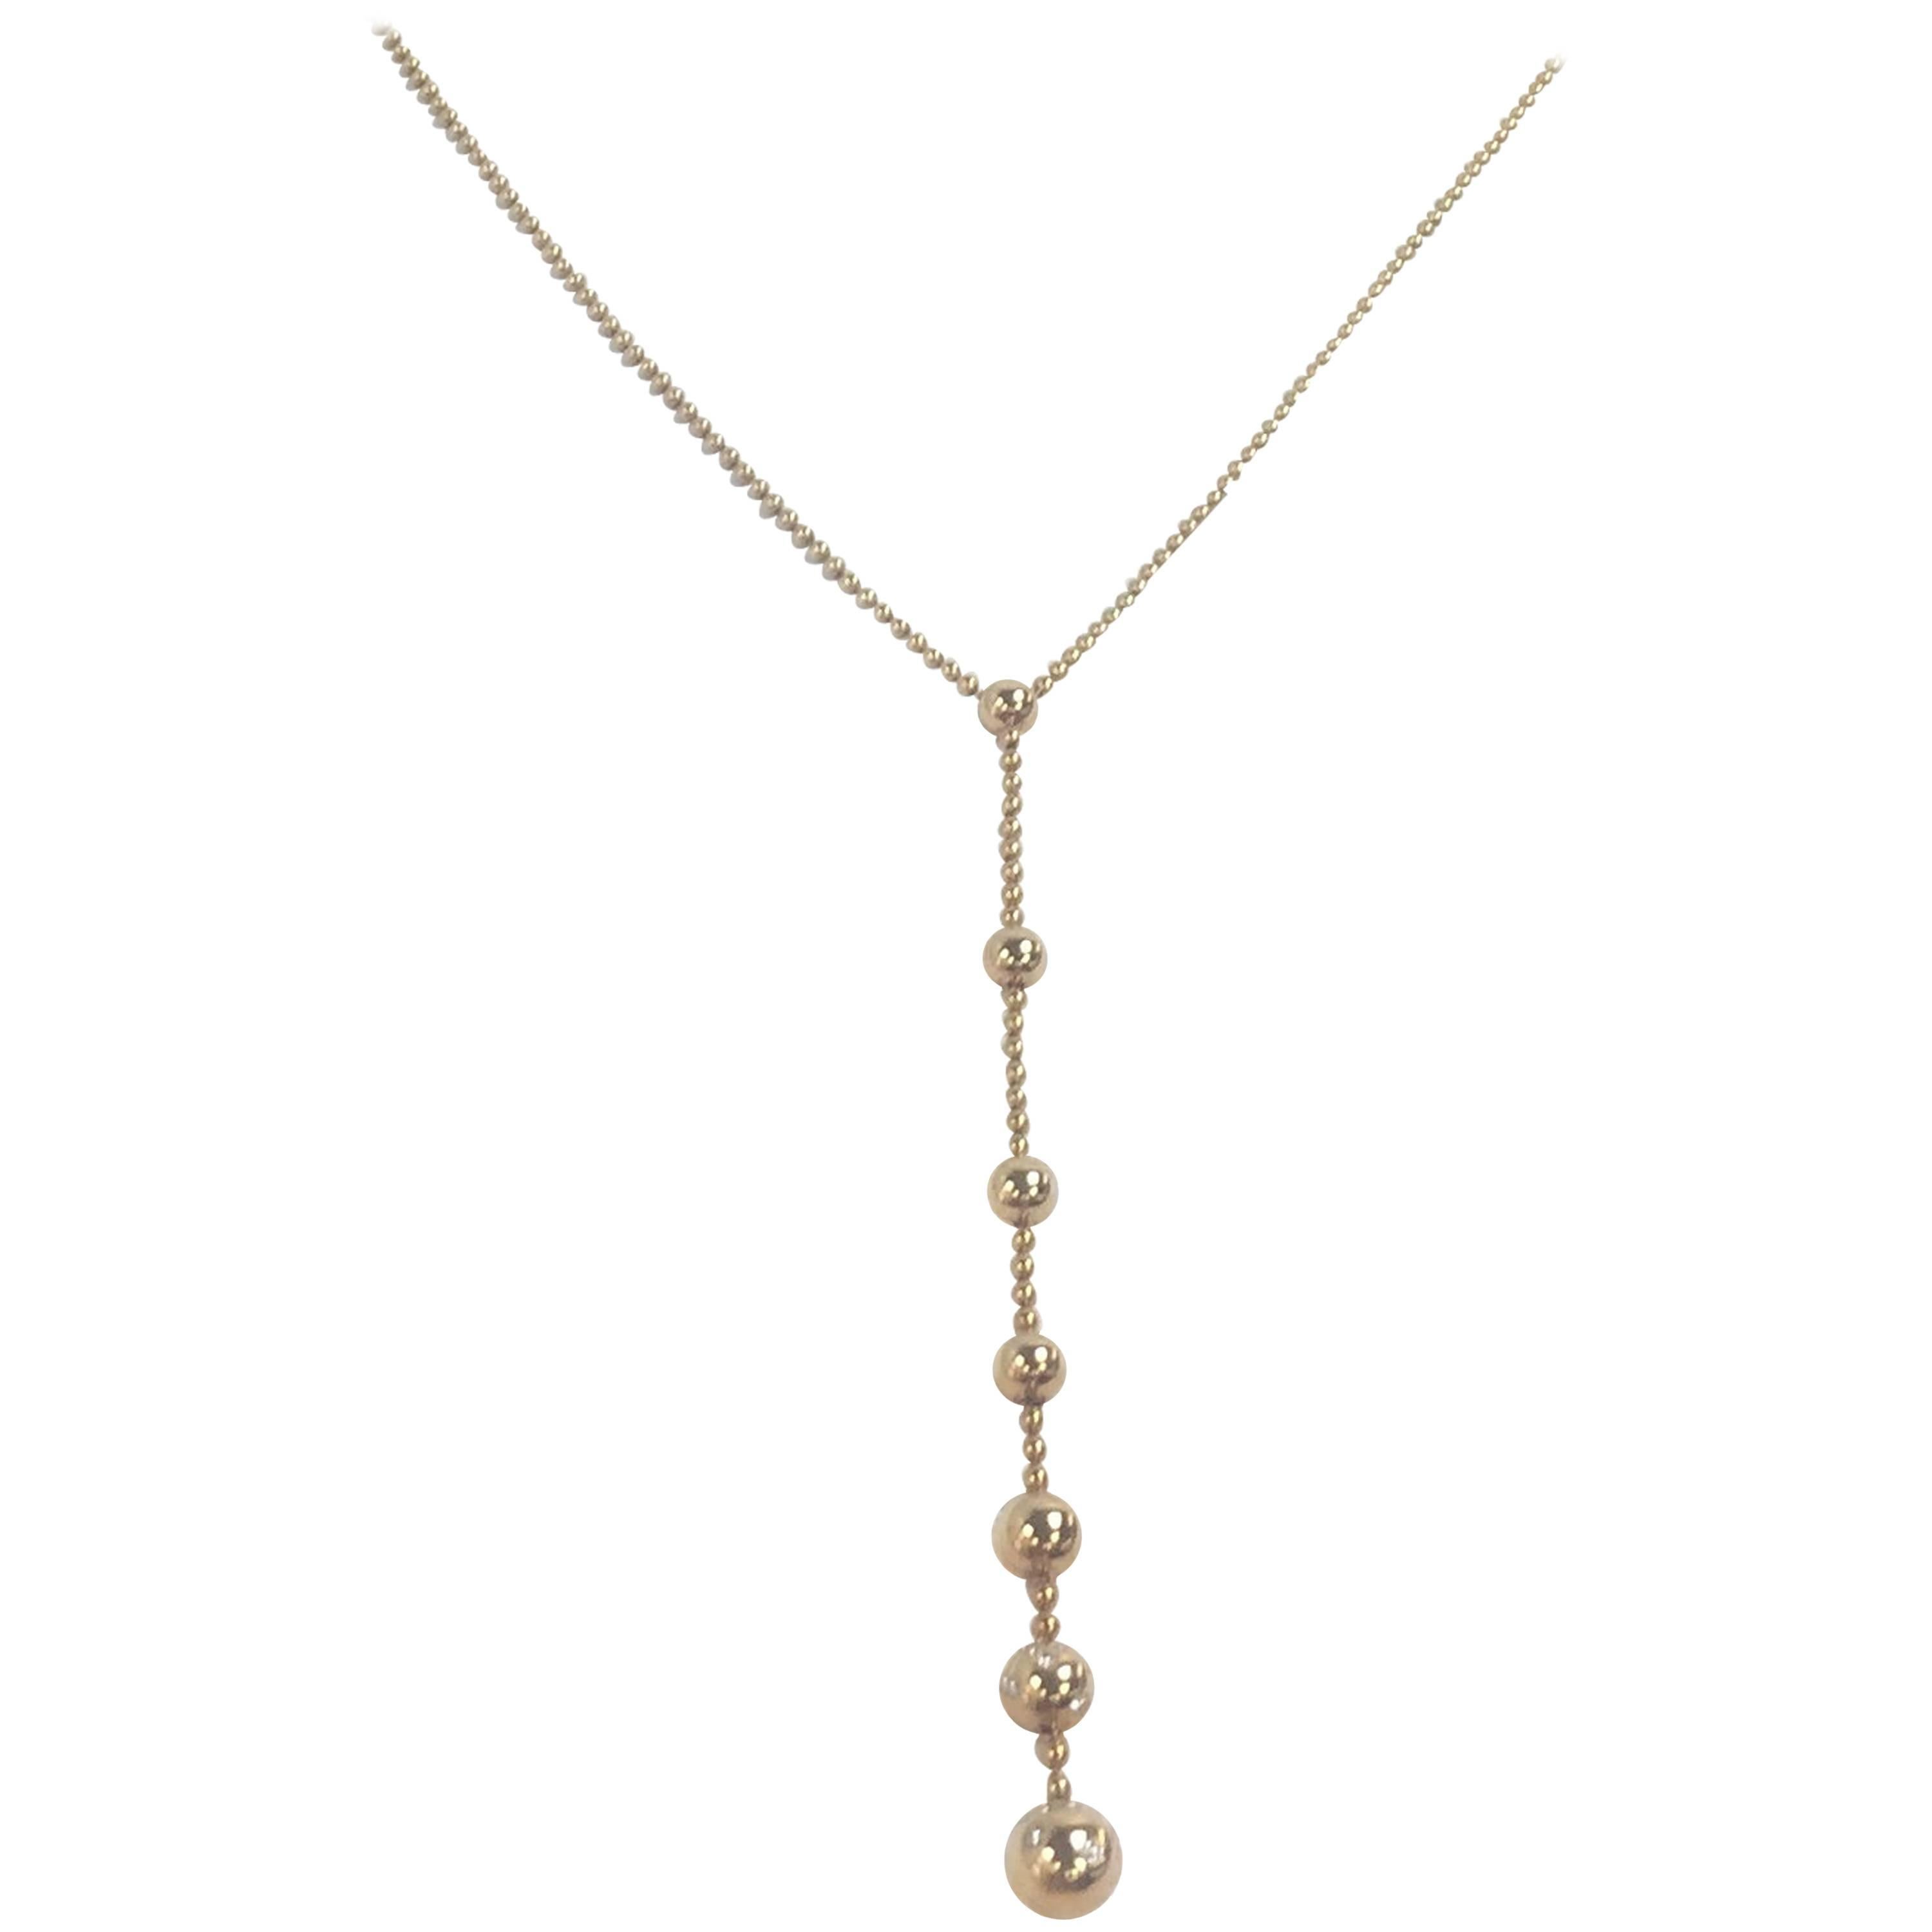 Cartier "Draperie" Lariat Necklace in 18 Karat Gold